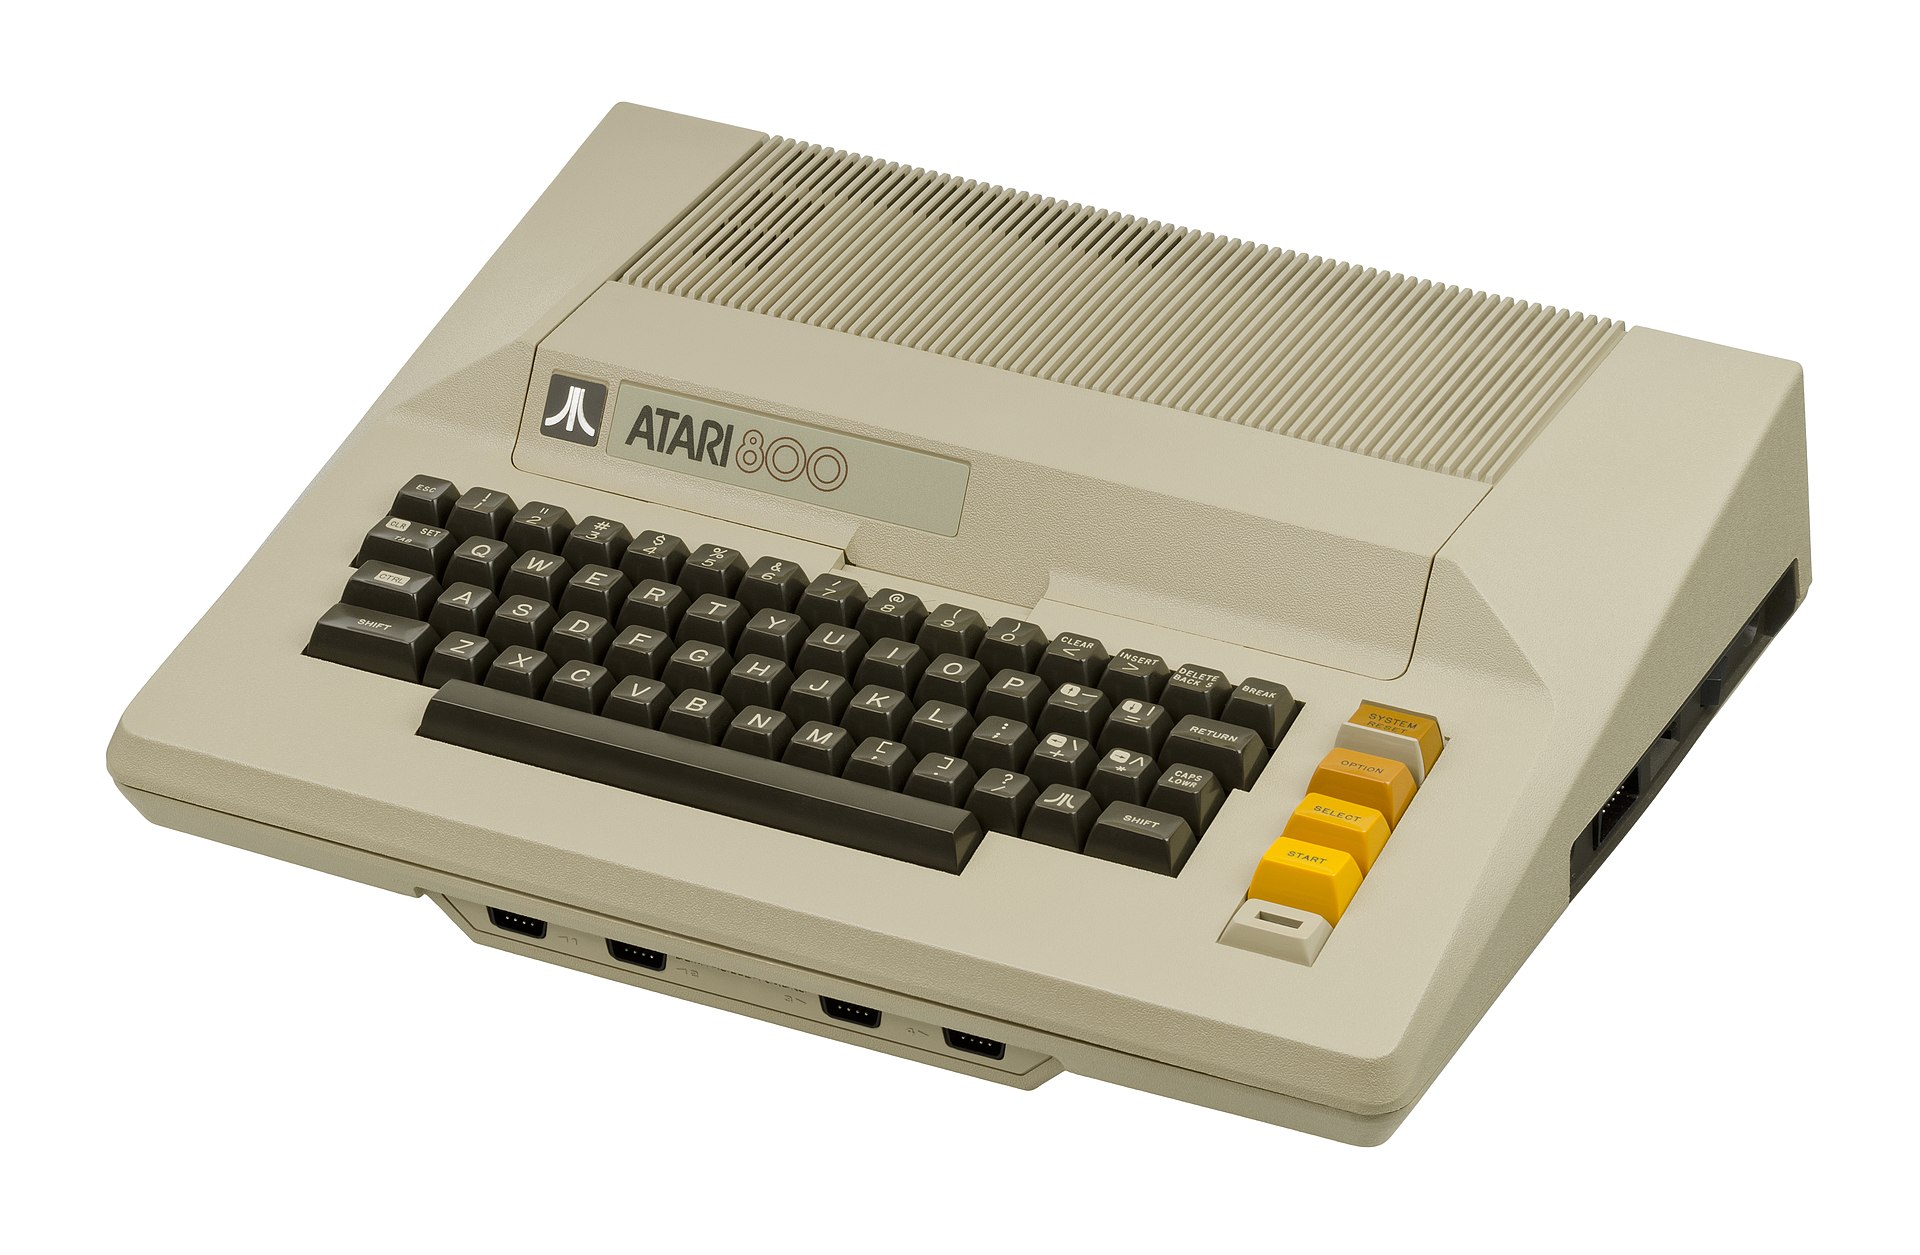 1920px-Atari-800-Computer-FL.jpg